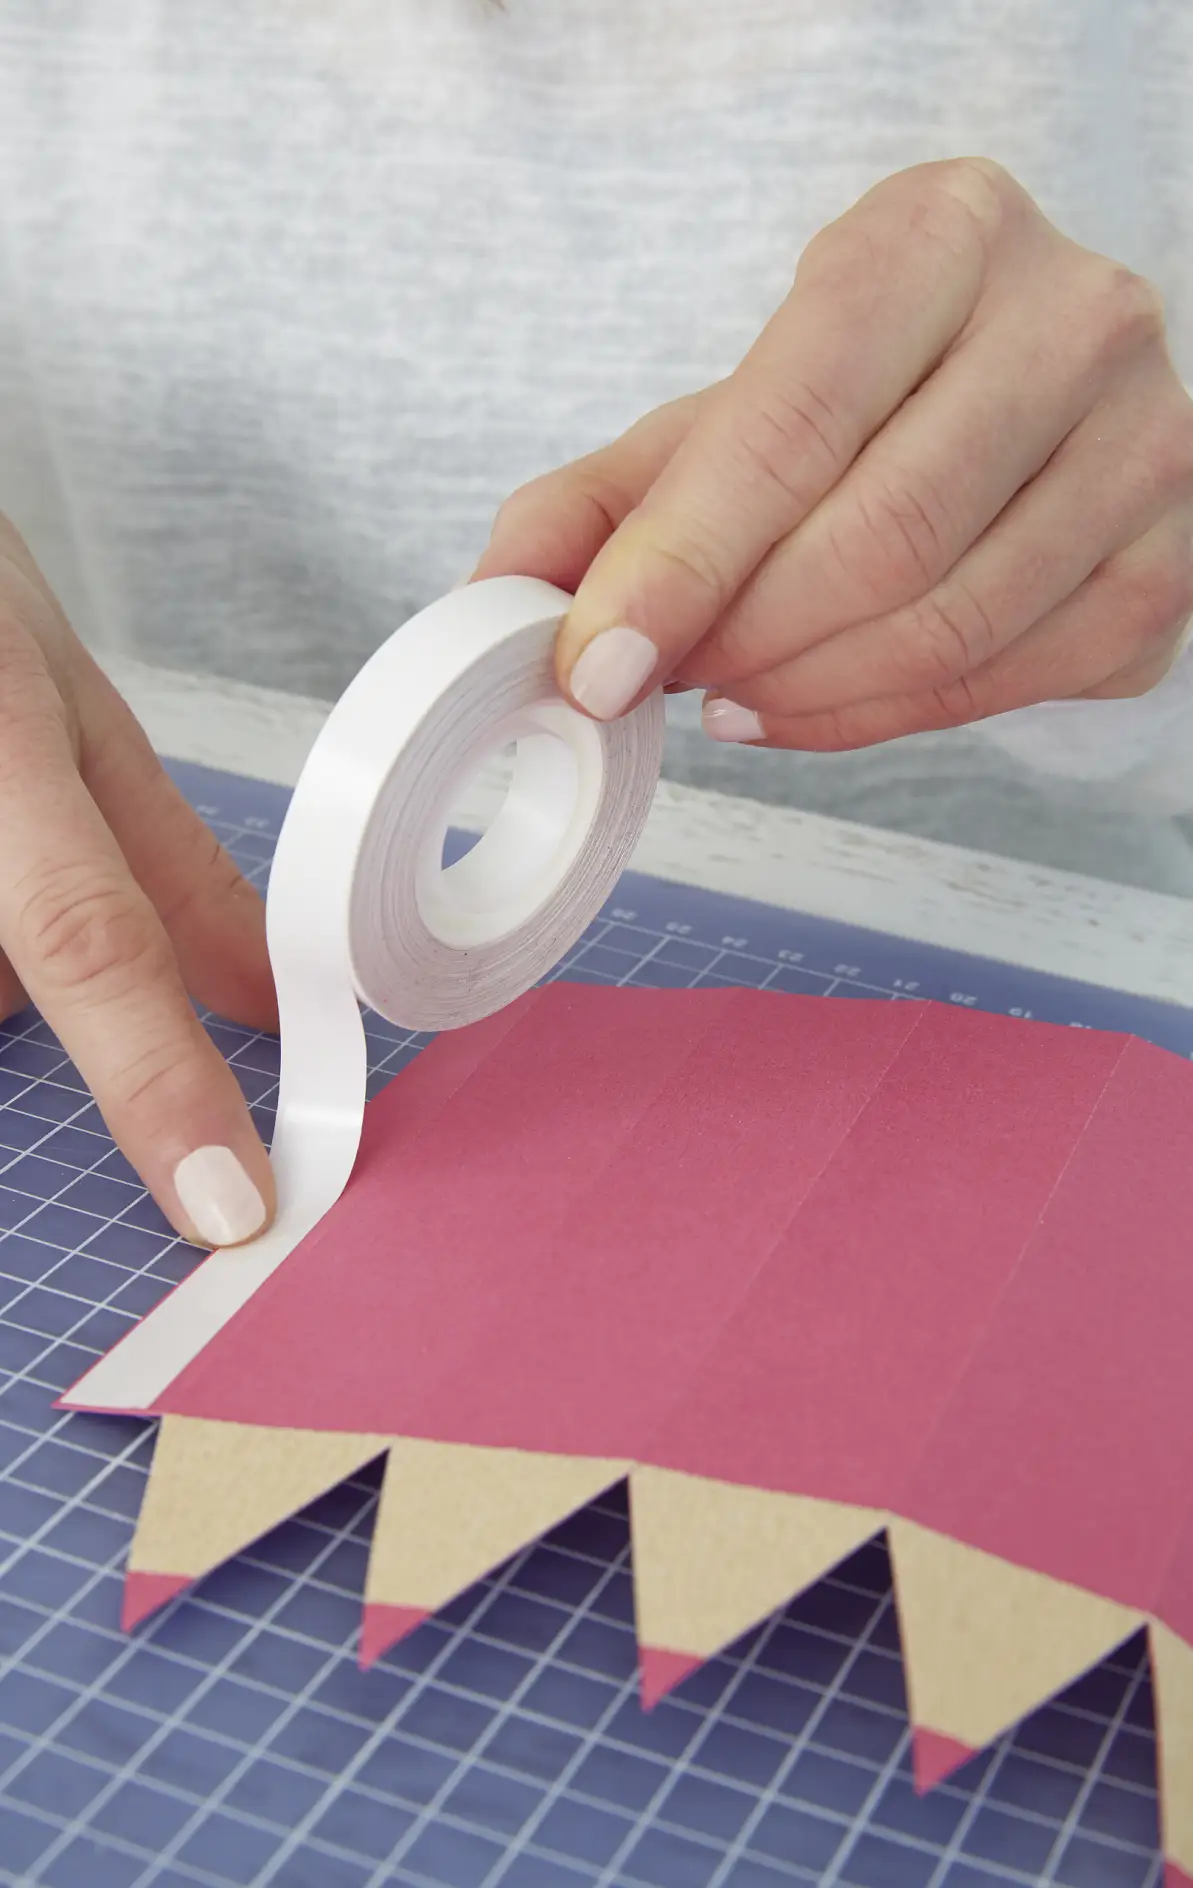 DIY Abecedarian bag / Step 6: Apply adhesive tape